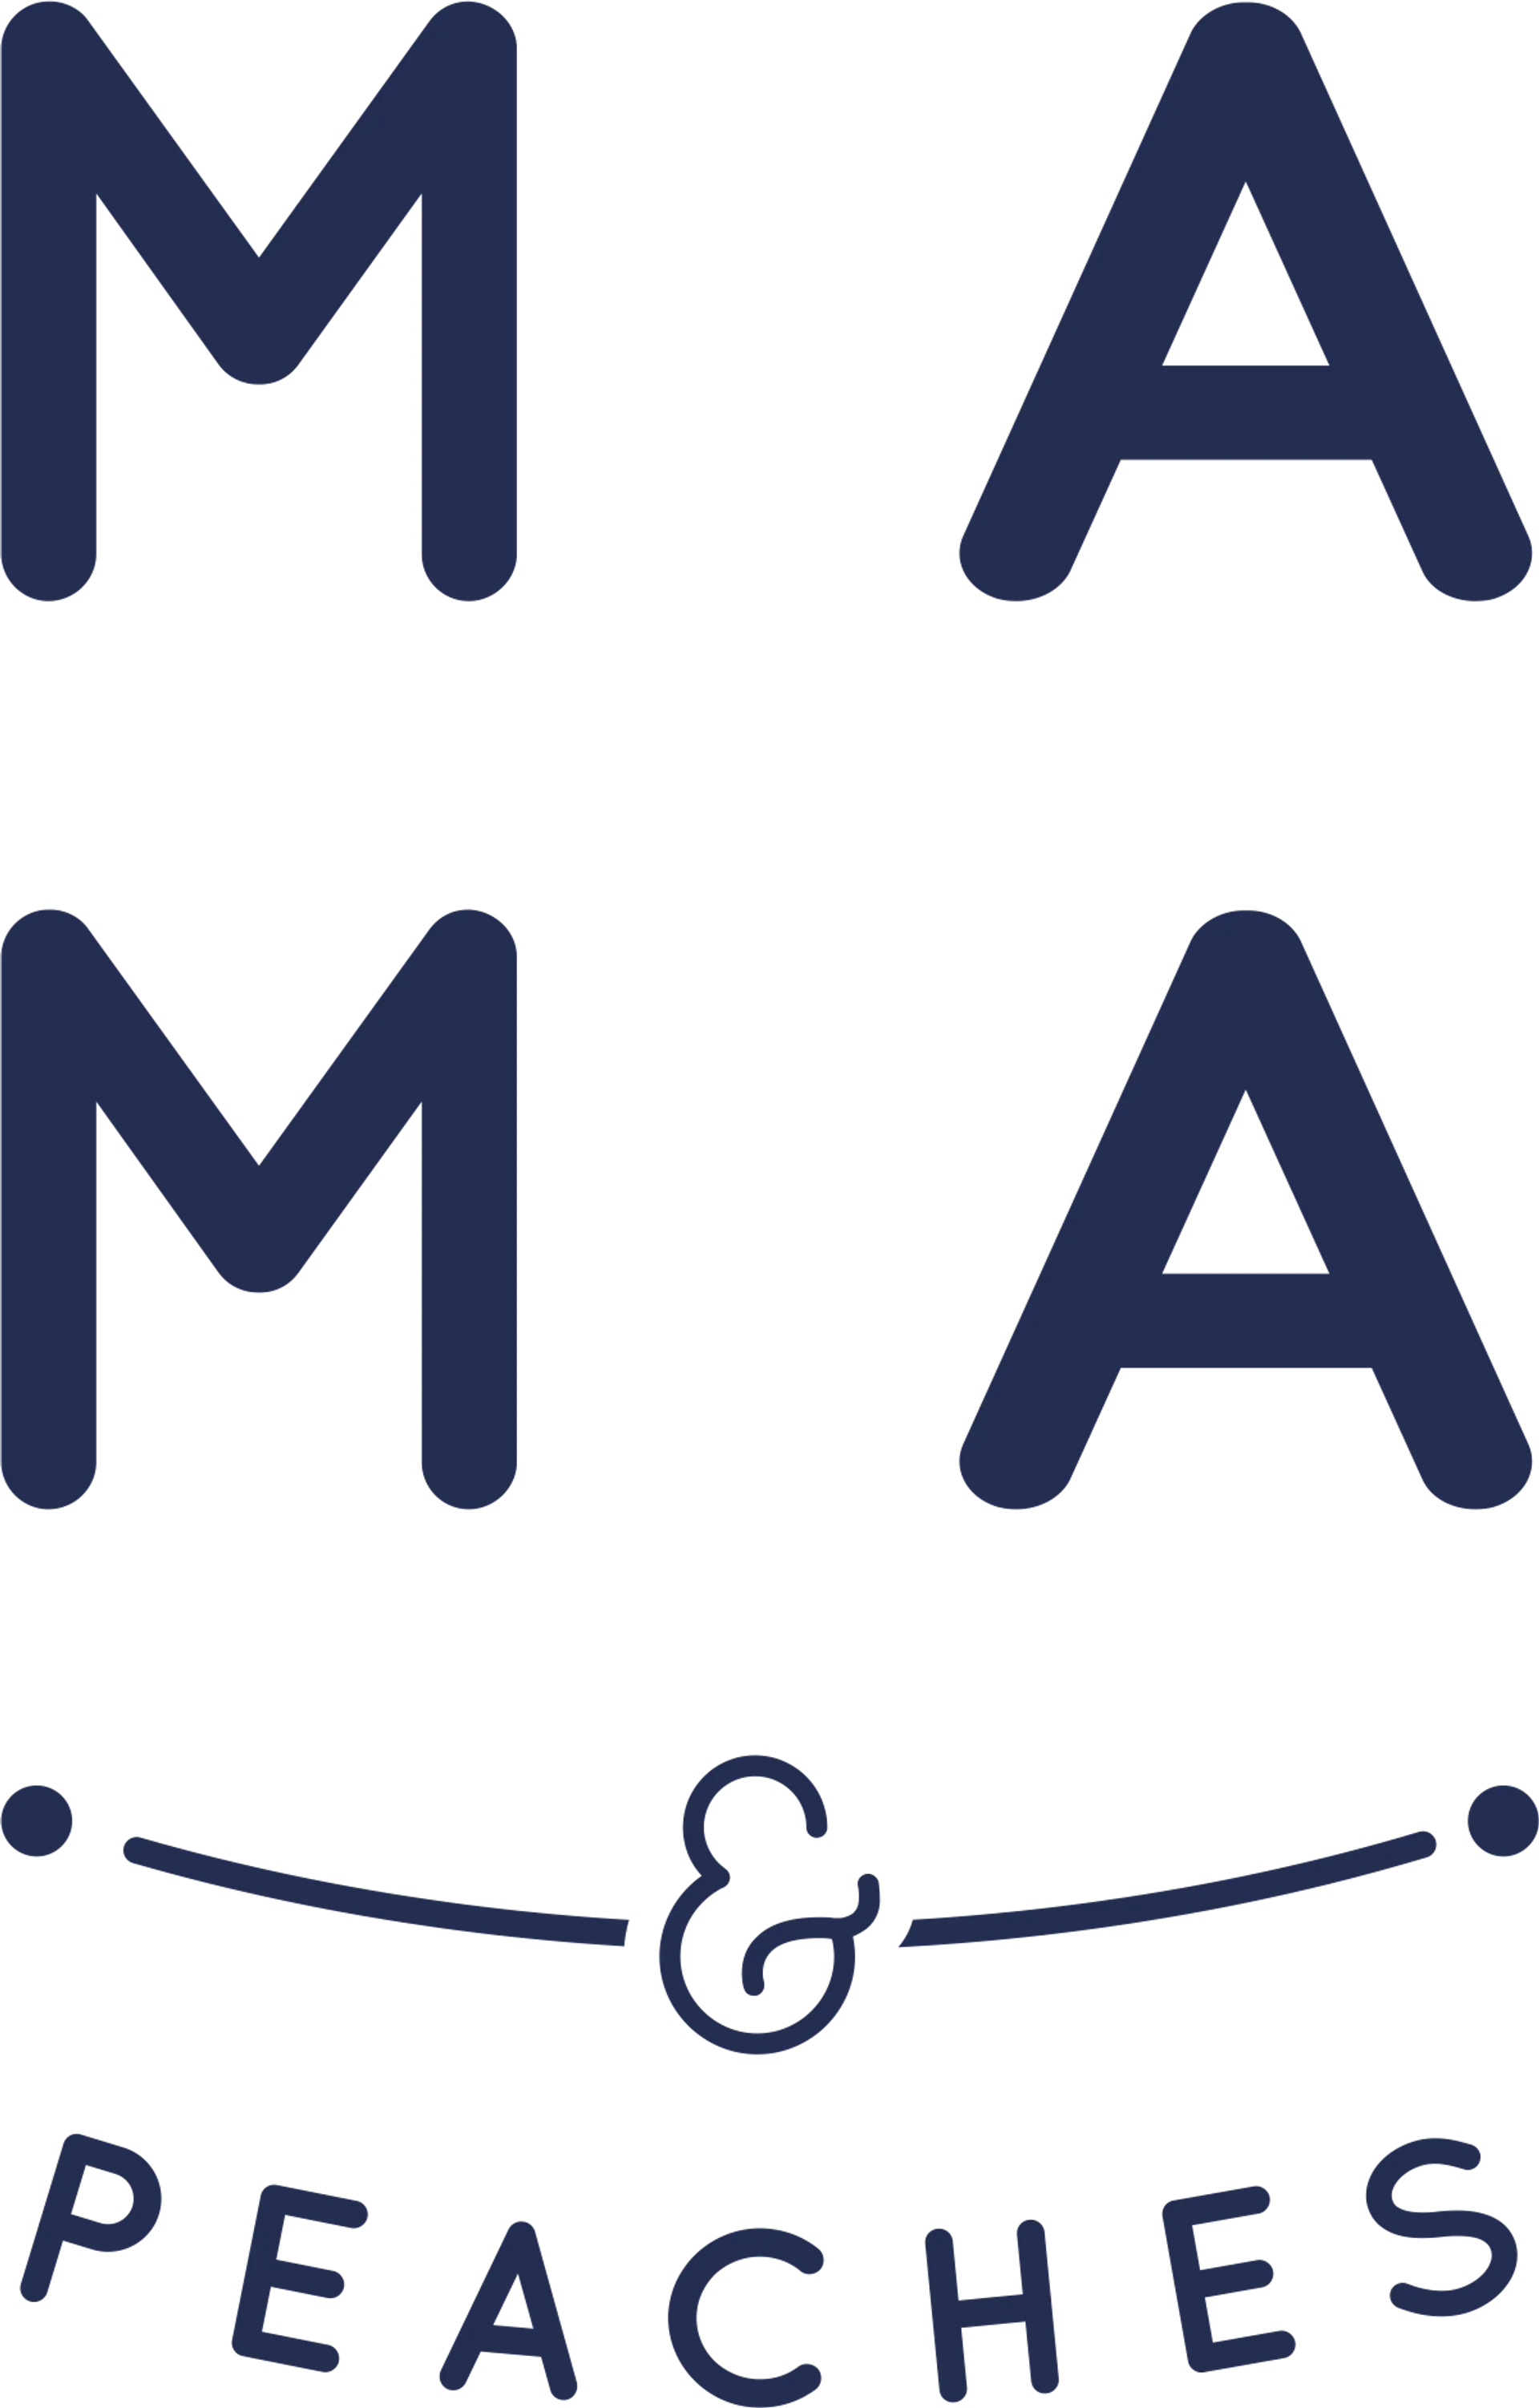 MAMA & PEACHES logo. Current catalogue